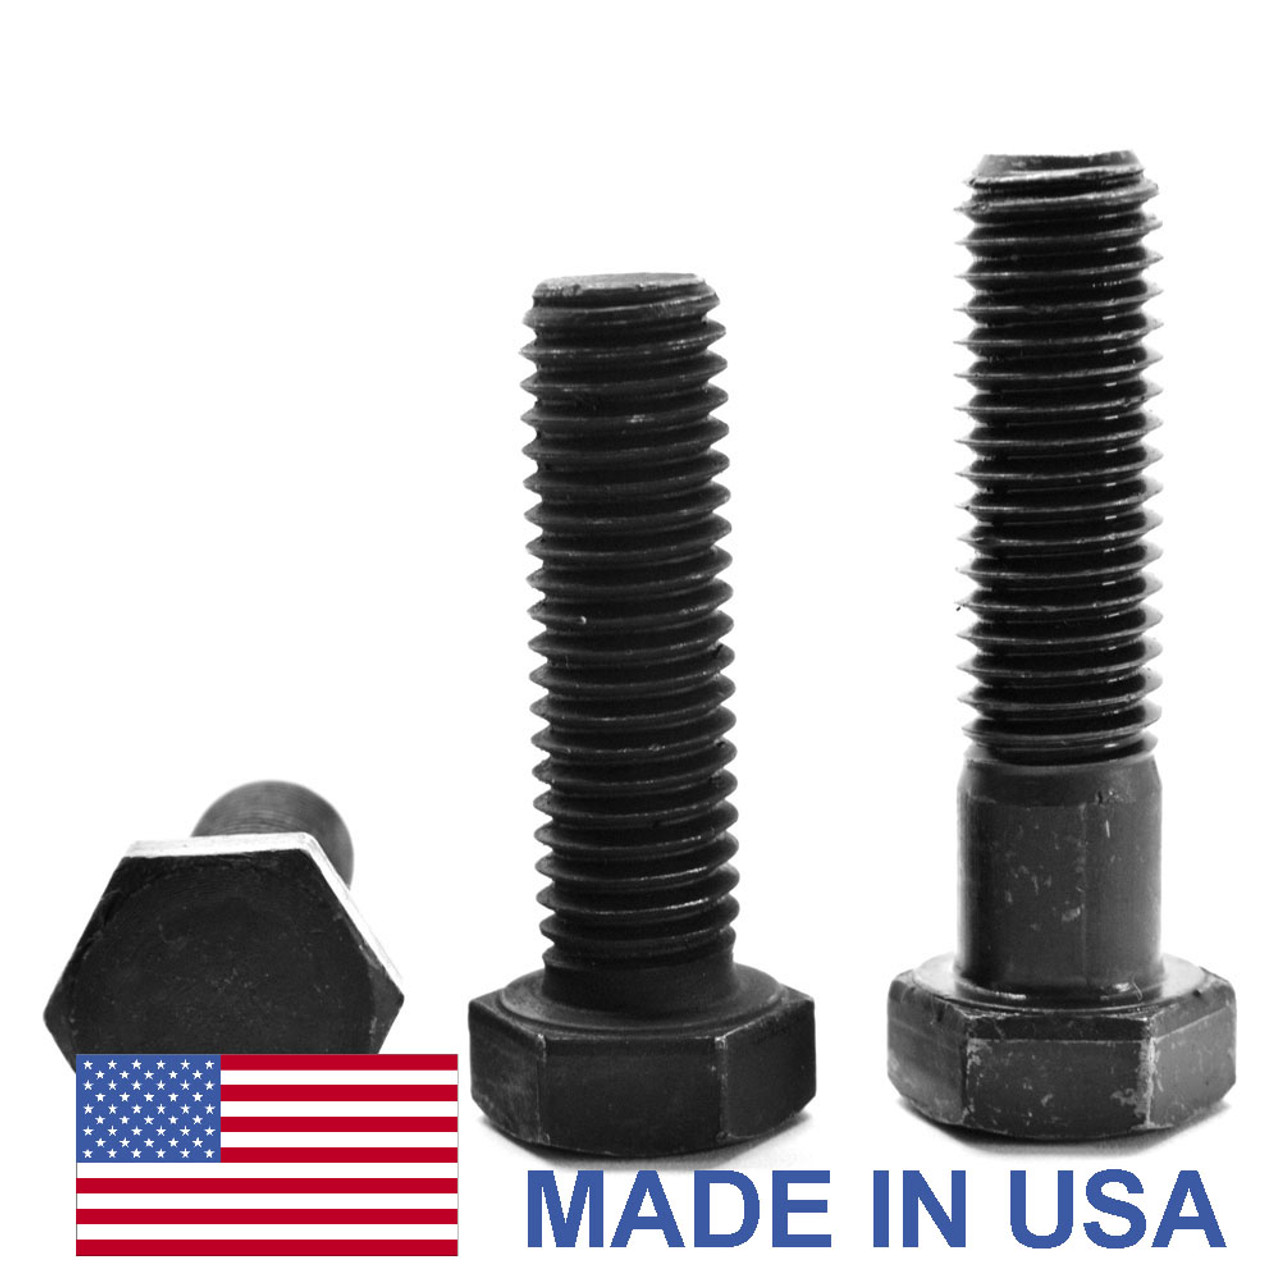 5/16"-18 x 1 3/8" (PT) Coarse Thread Grade 8 Hex Cap Screw (Bolt) - USA Alloy Steel Black Oxide